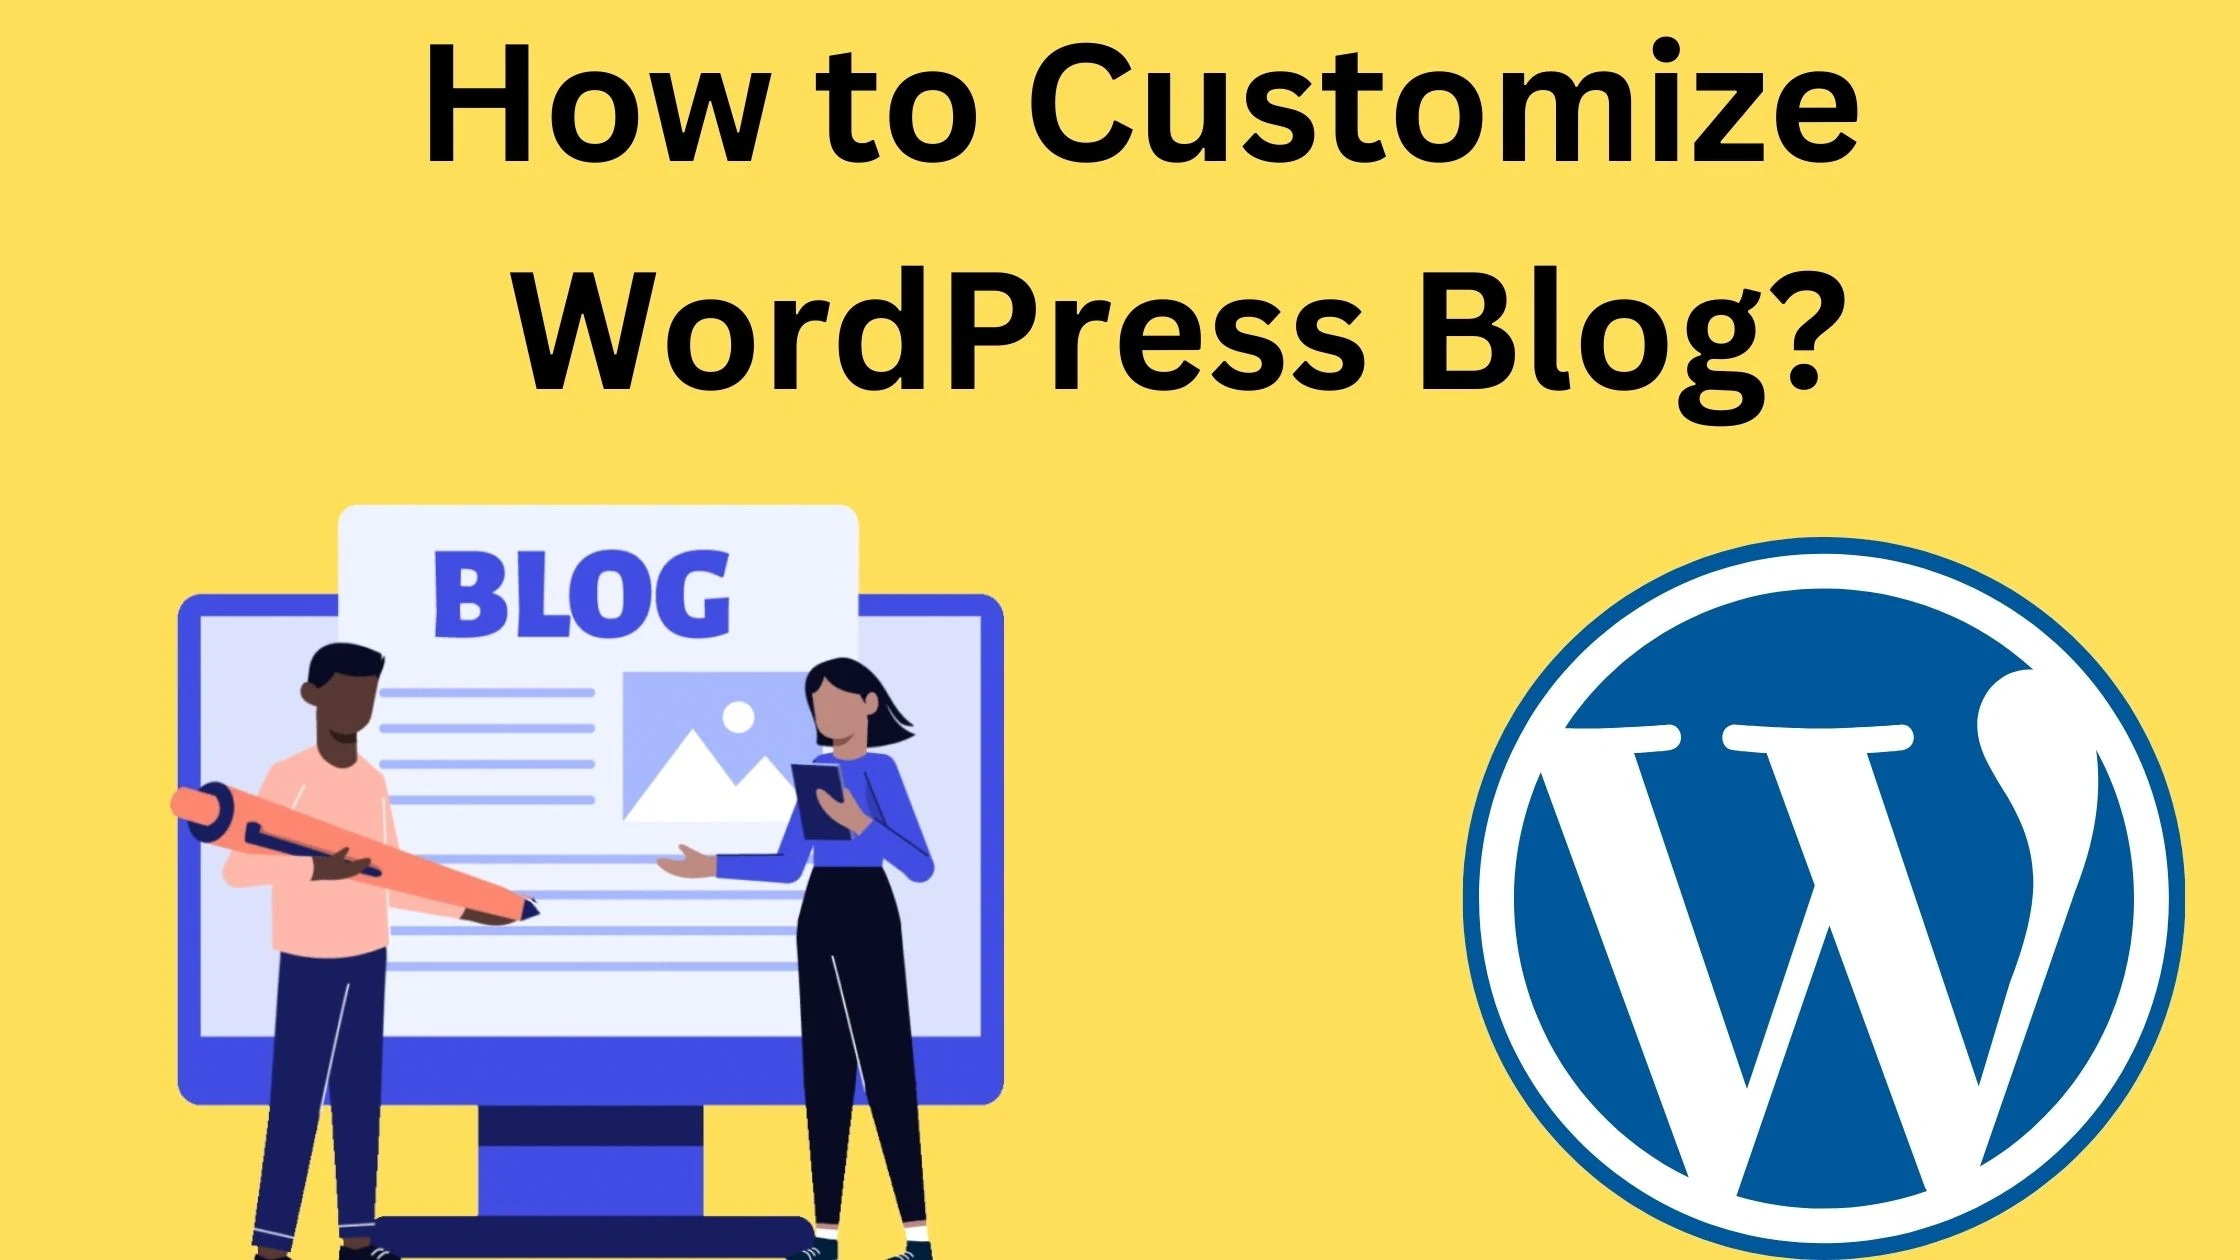 How can I customize my WordPress blog?